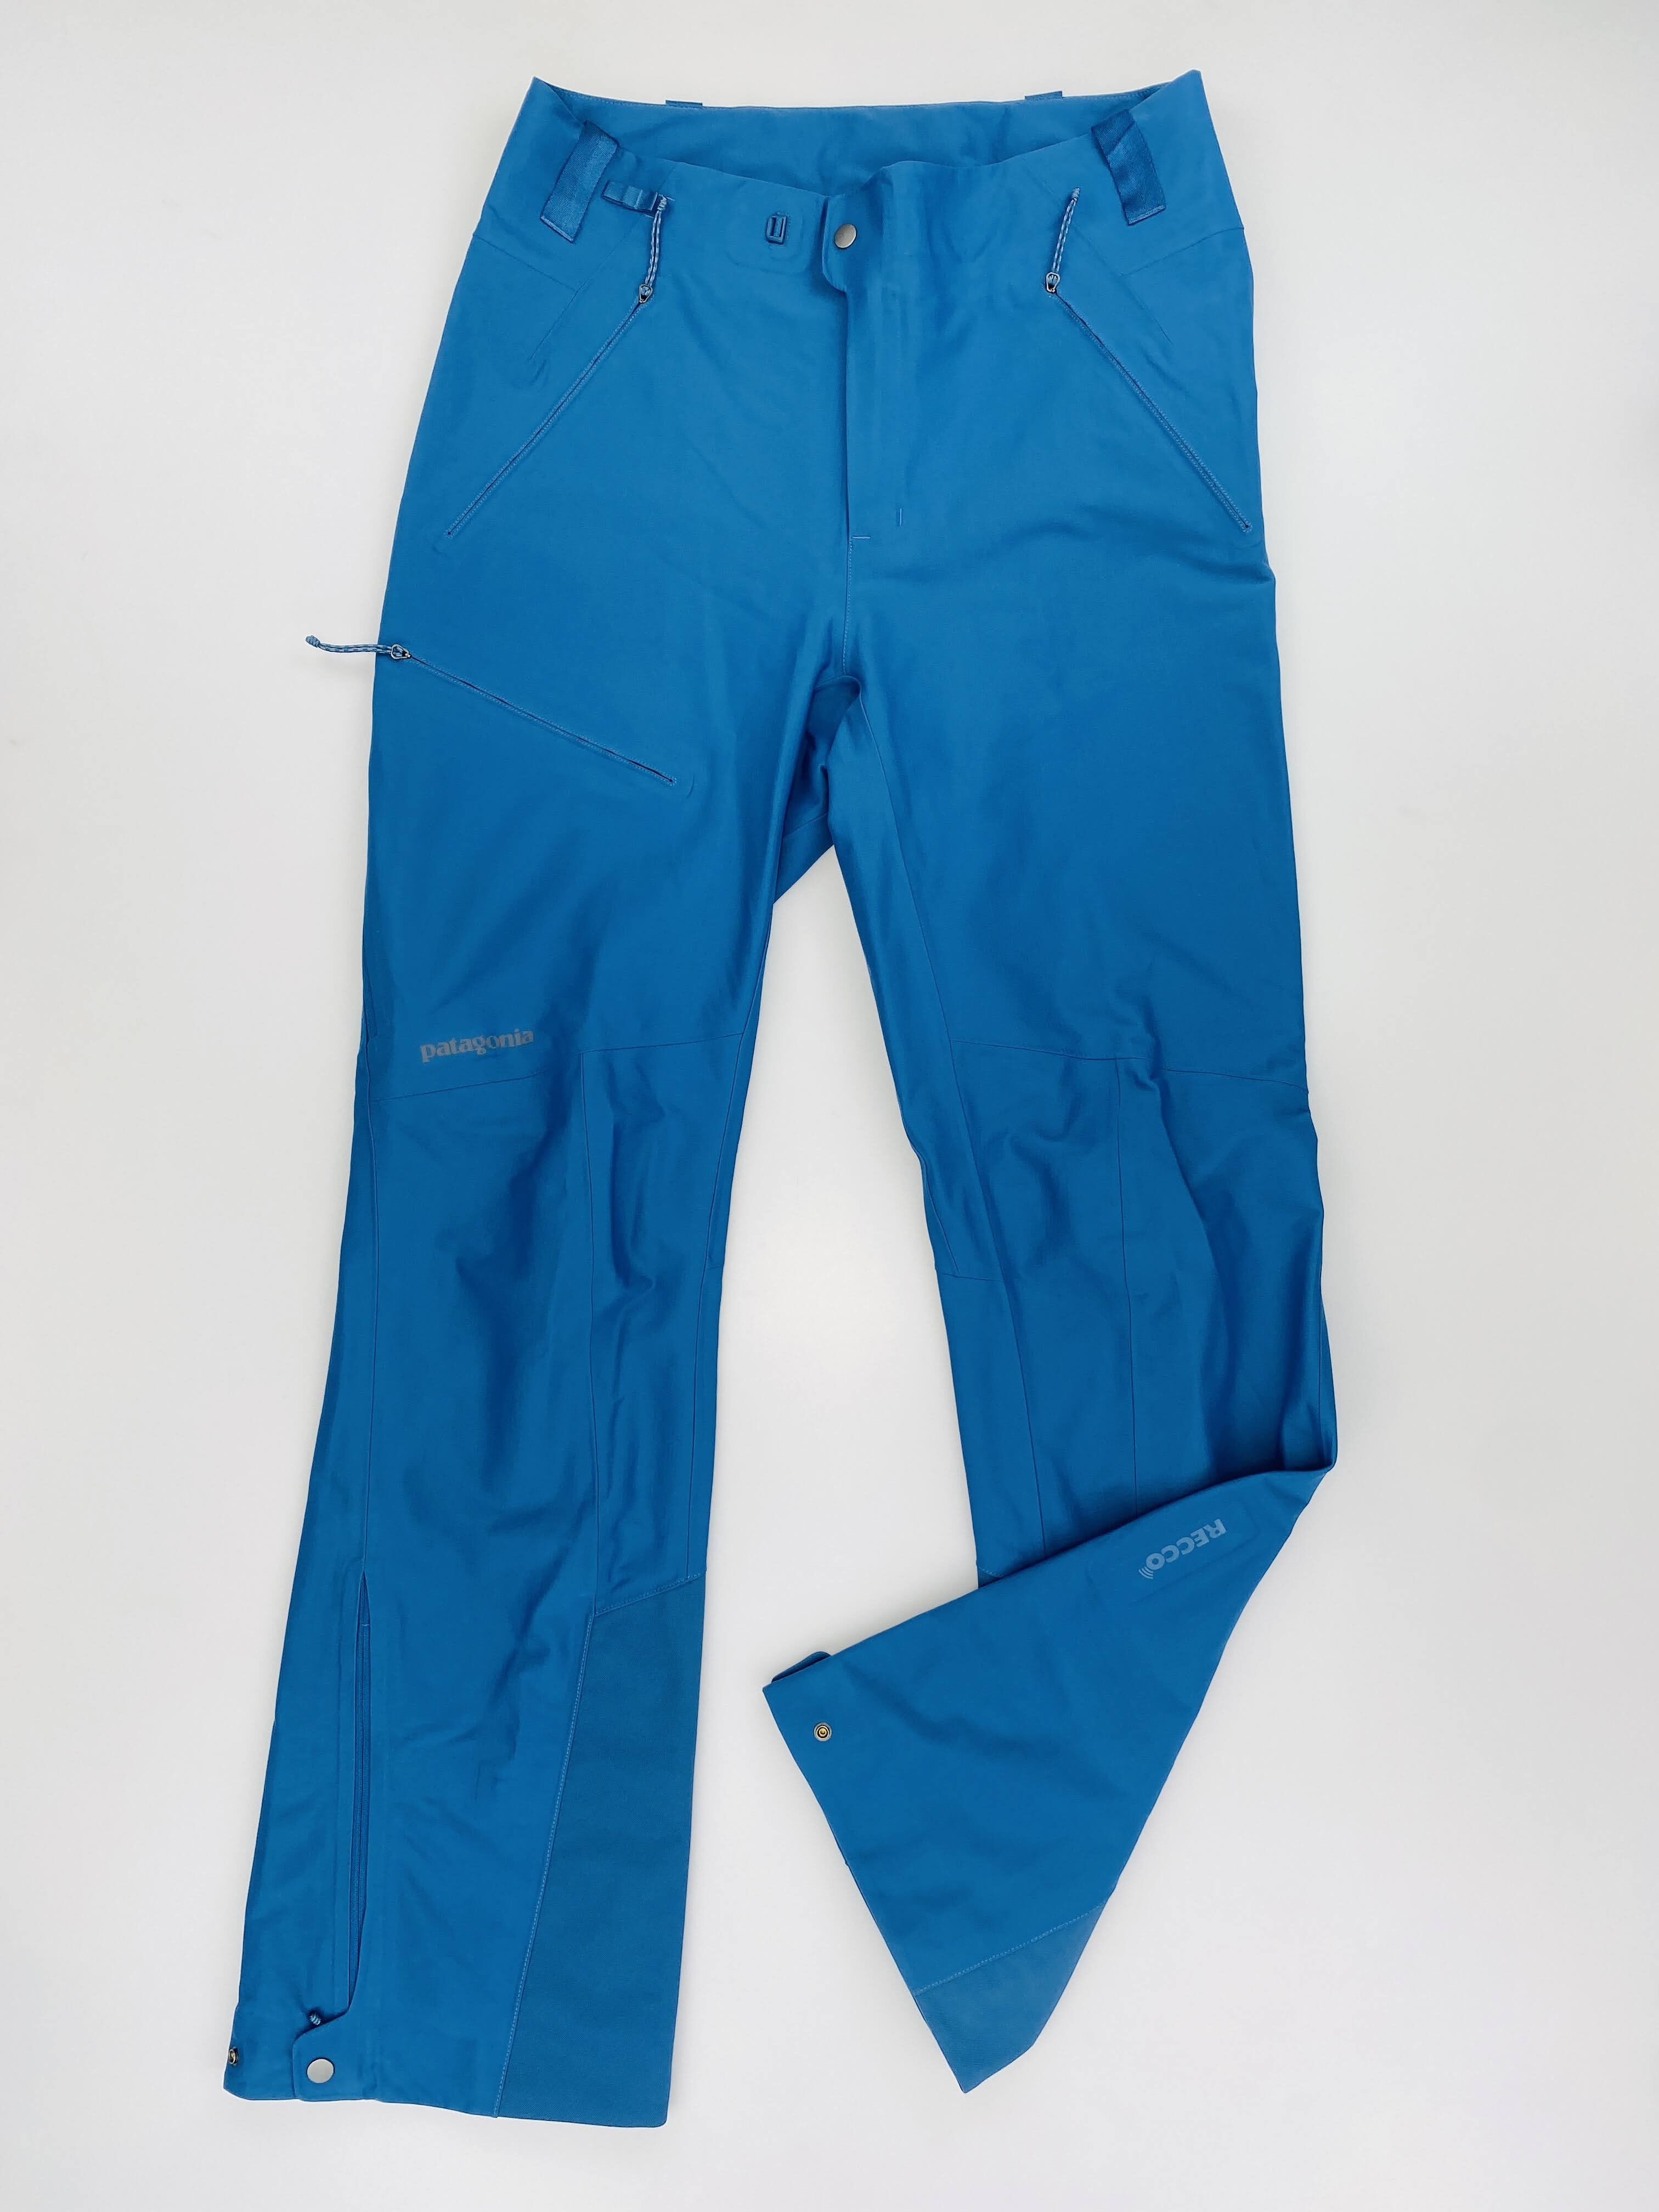 Patagonia M's Upstride Pants - Seconde main Pantalon randonnée homme - Bleu - M | Hardloop